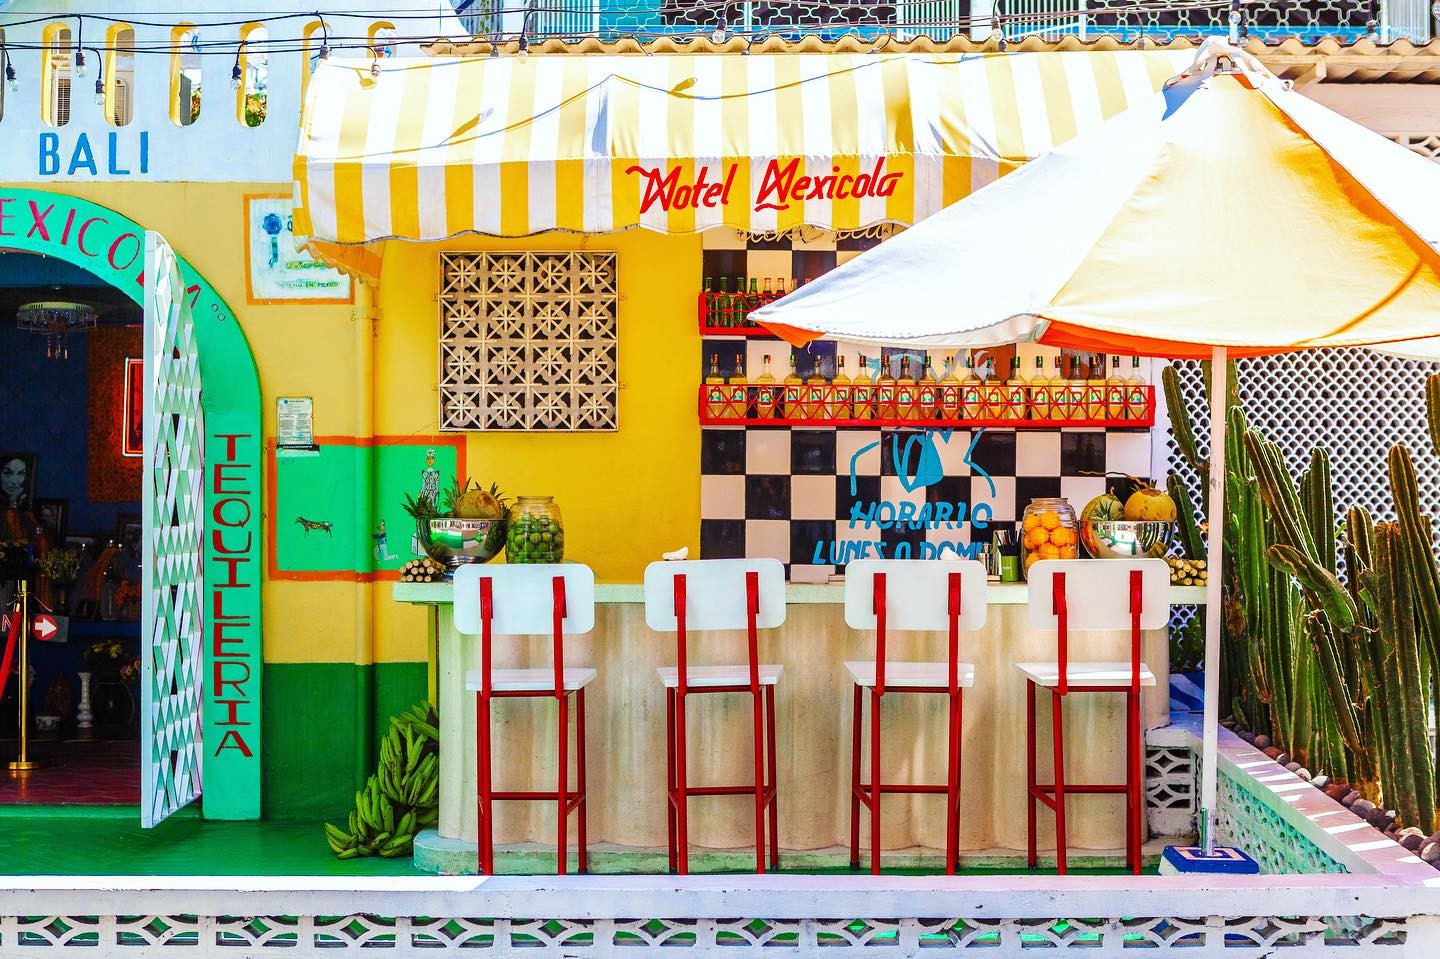 Motel Mexicola - Nightclubs In Bali